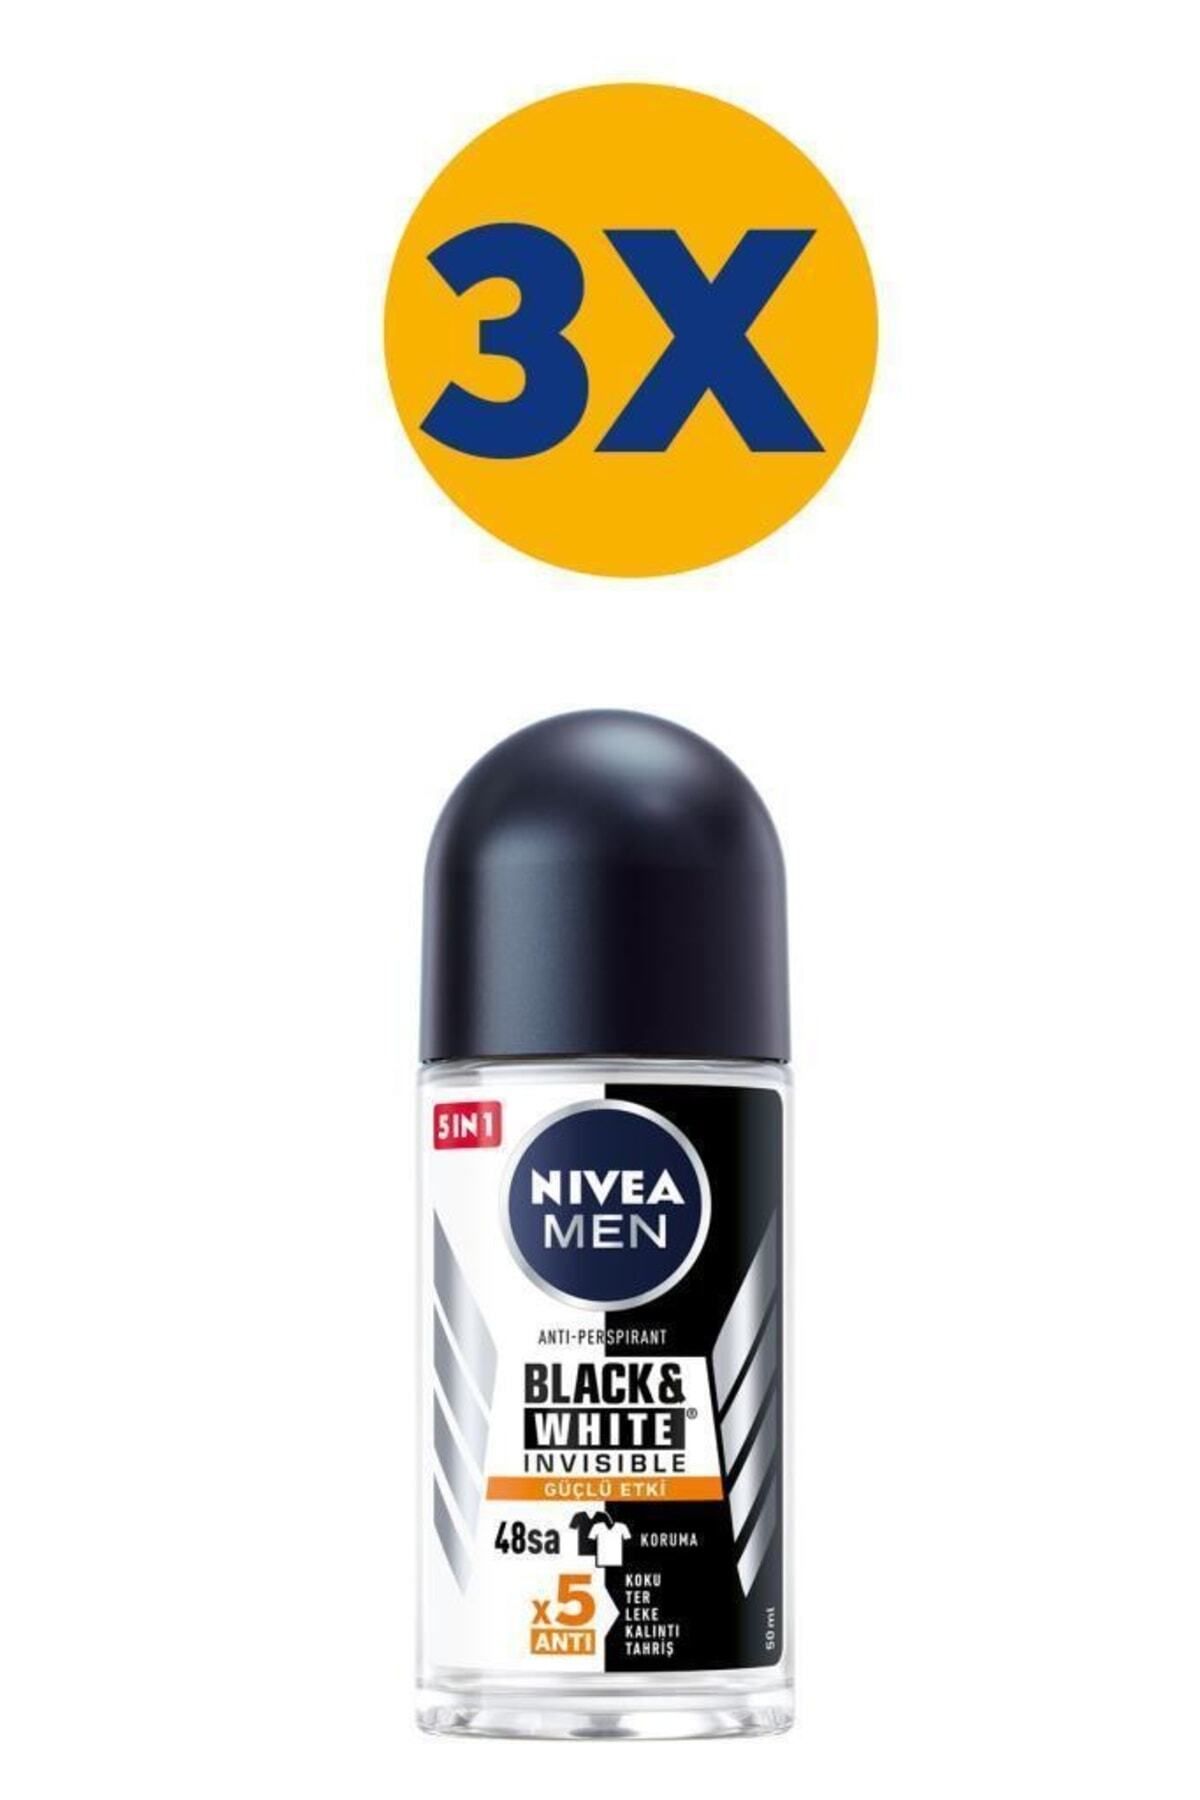 NIVEA Men Black&white Invisible Güçlü Etki Erkek Roll On 50ml X3 Adet,48 Saat Anti-perspirant Koruma